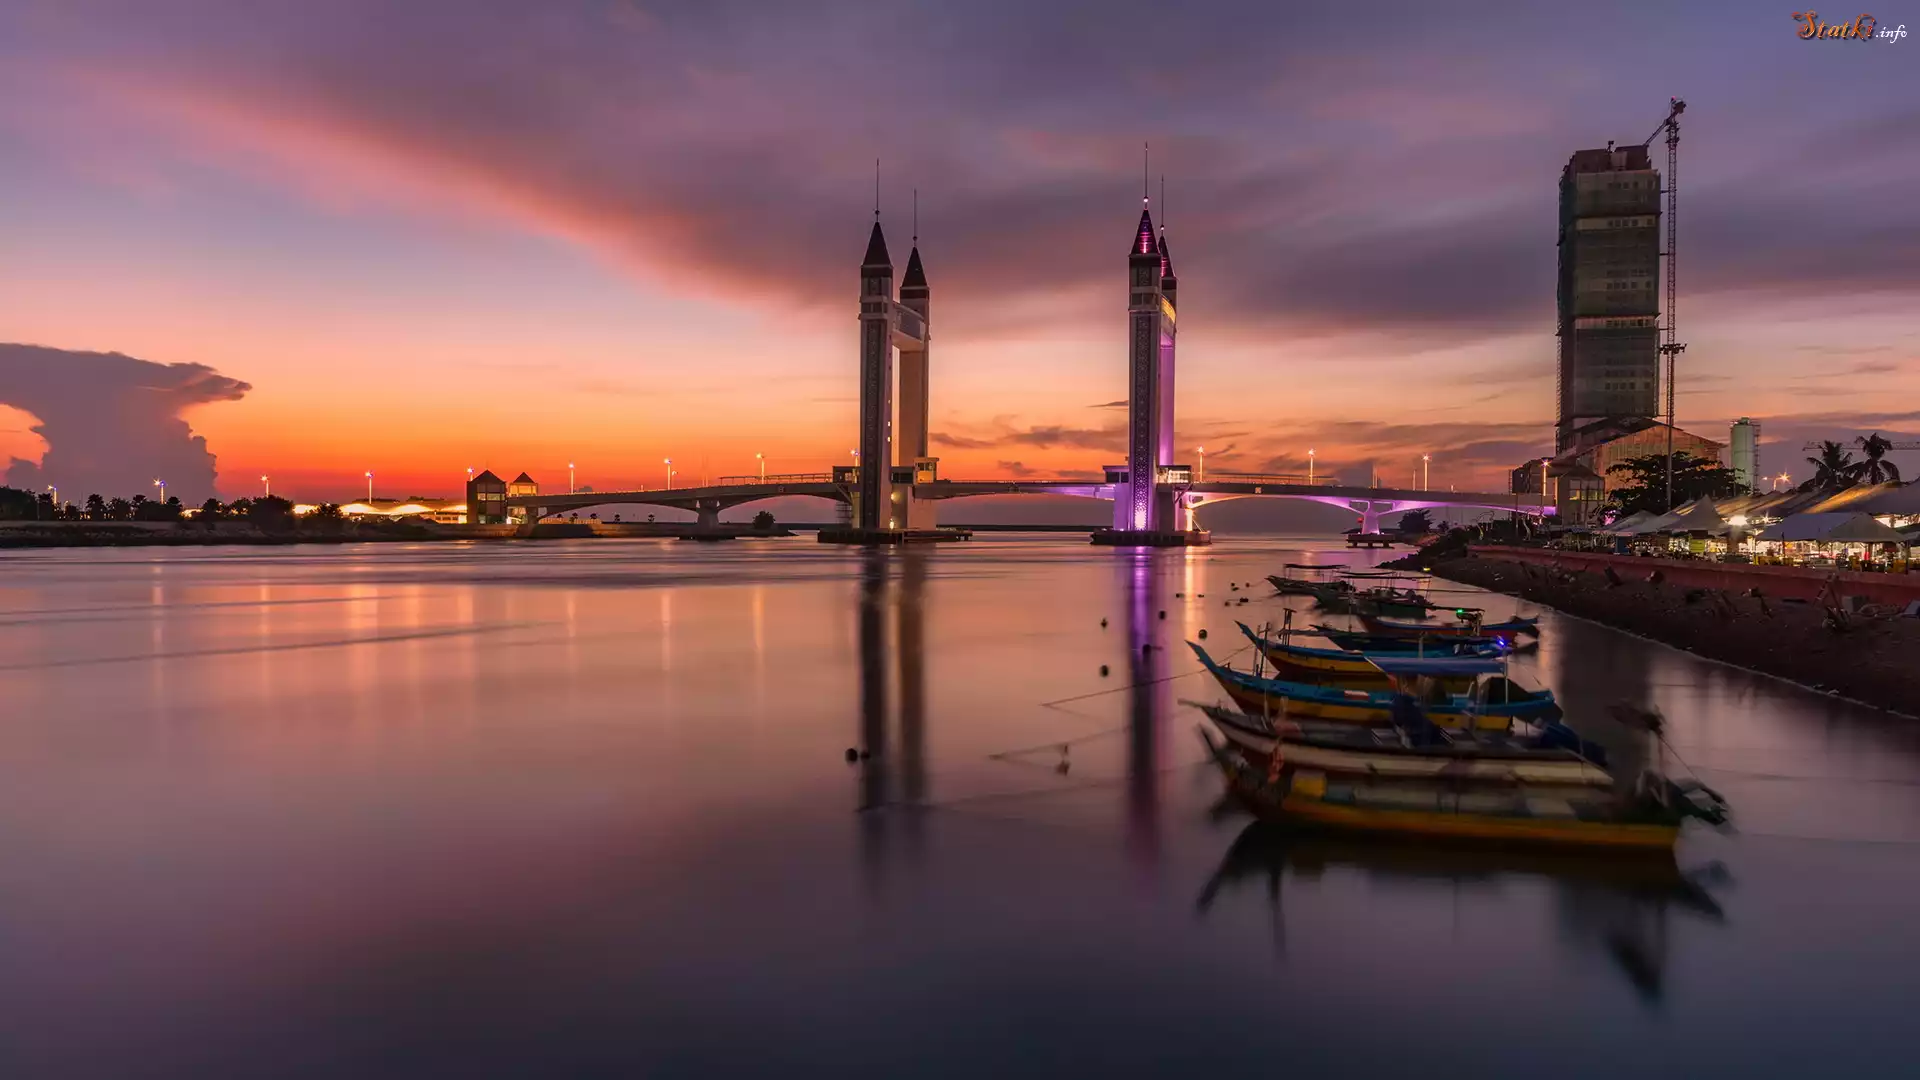 Rzeka Terengganu, Wschód słońca, Most zwodzony, Terengganu Drawbridge, Łódki, Kuala Terengganu, Malezja